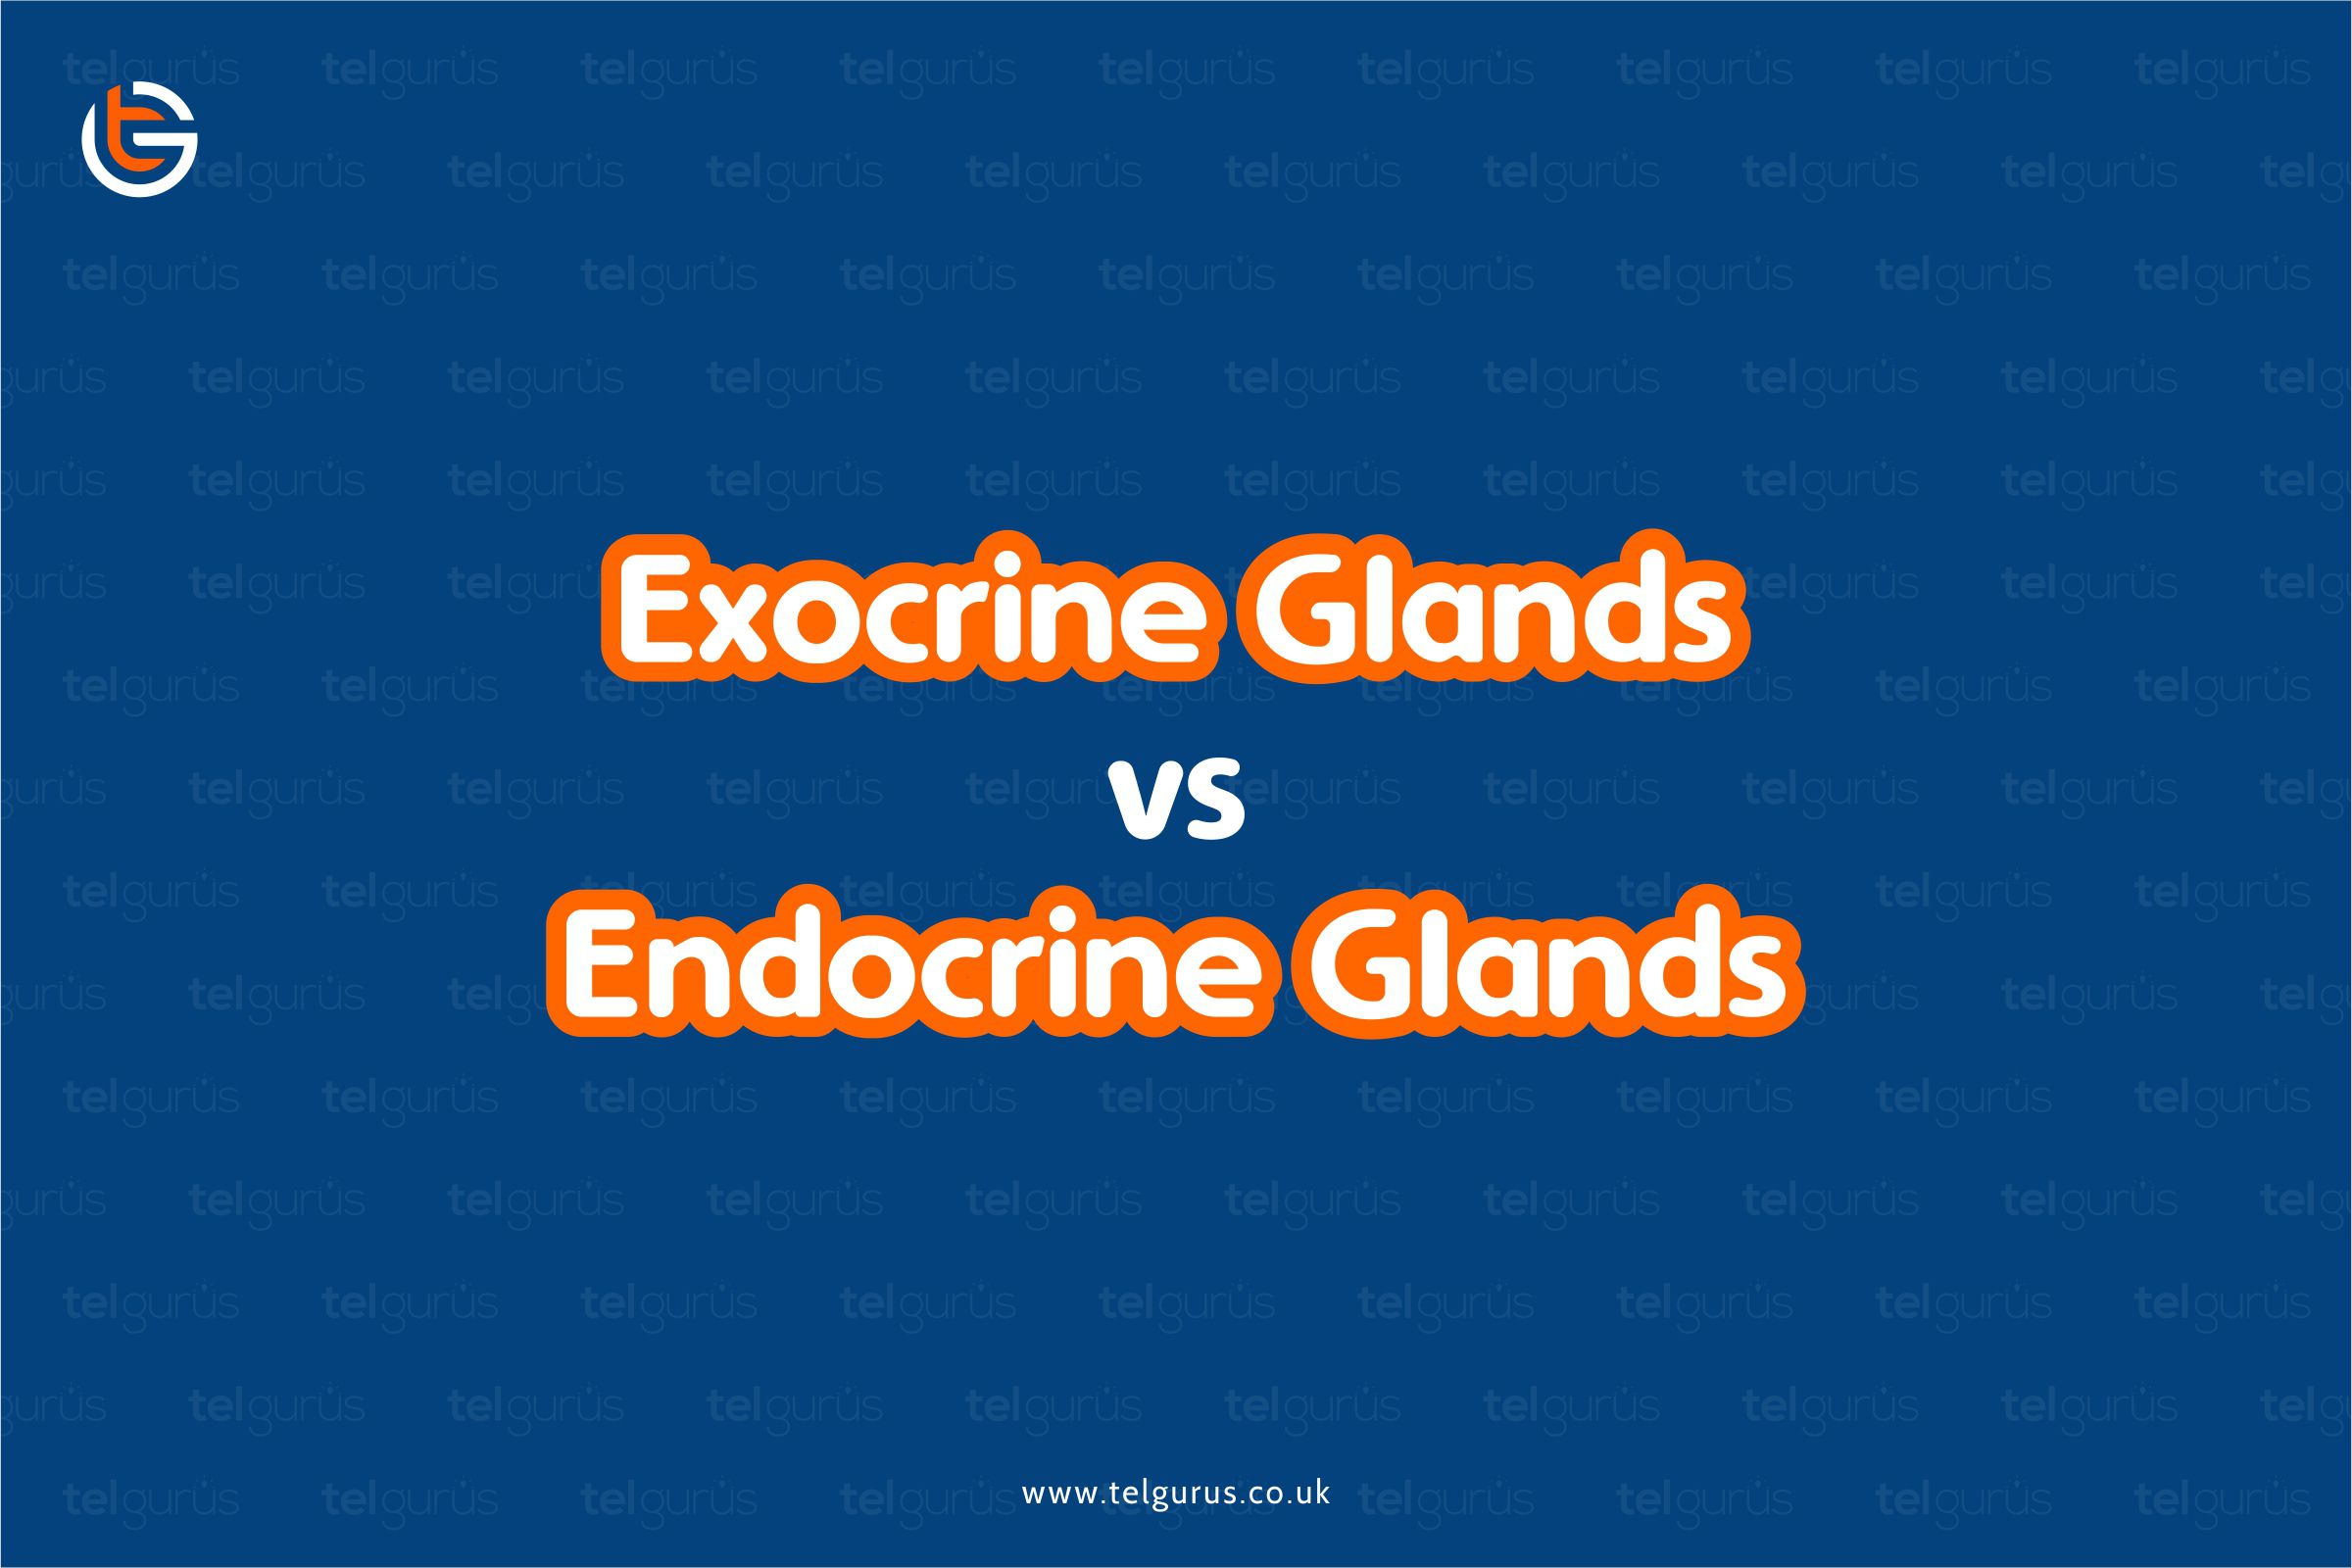 Exocrine vs Endocrine